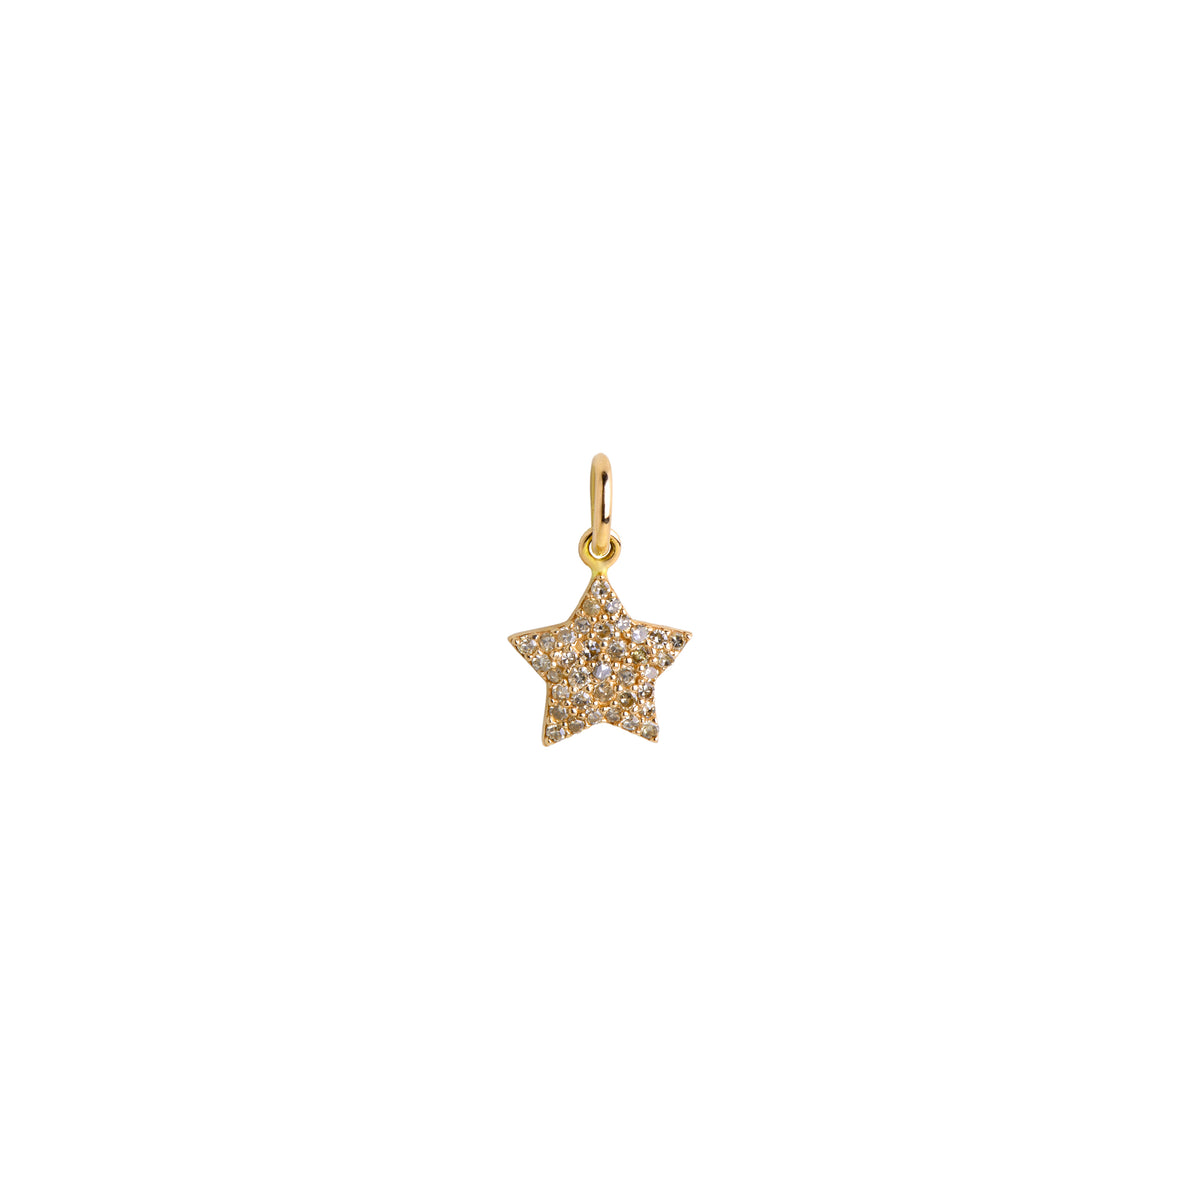 MINI DIAMOND STAR PENDANT - Bridget King Jewelry